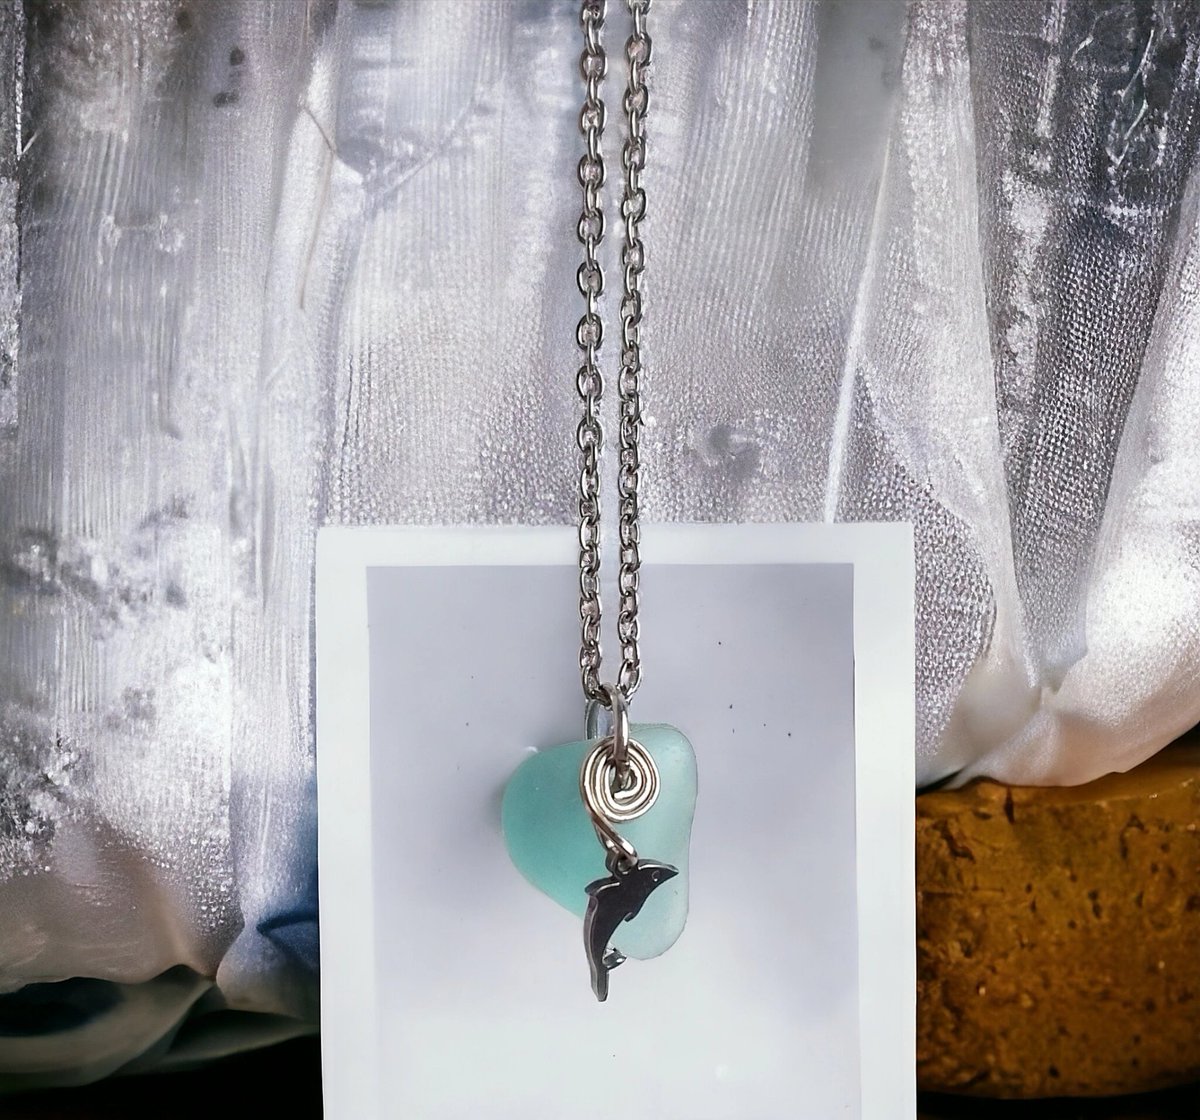 Aqua dolphin charm necklace 🐬🌊
#craftmakersuk #TheCraftersUk #SmartSocial #HandmadeHour #UKGiftAM #handmadeinbritain #BizBubble #shopindie #UKGiftHour #bizhour #Craftsuk #craftbizparty #etsyfinds #womaninbizhour #inbizhour #elevenseshour #twistedthreadsukshop #seaglass